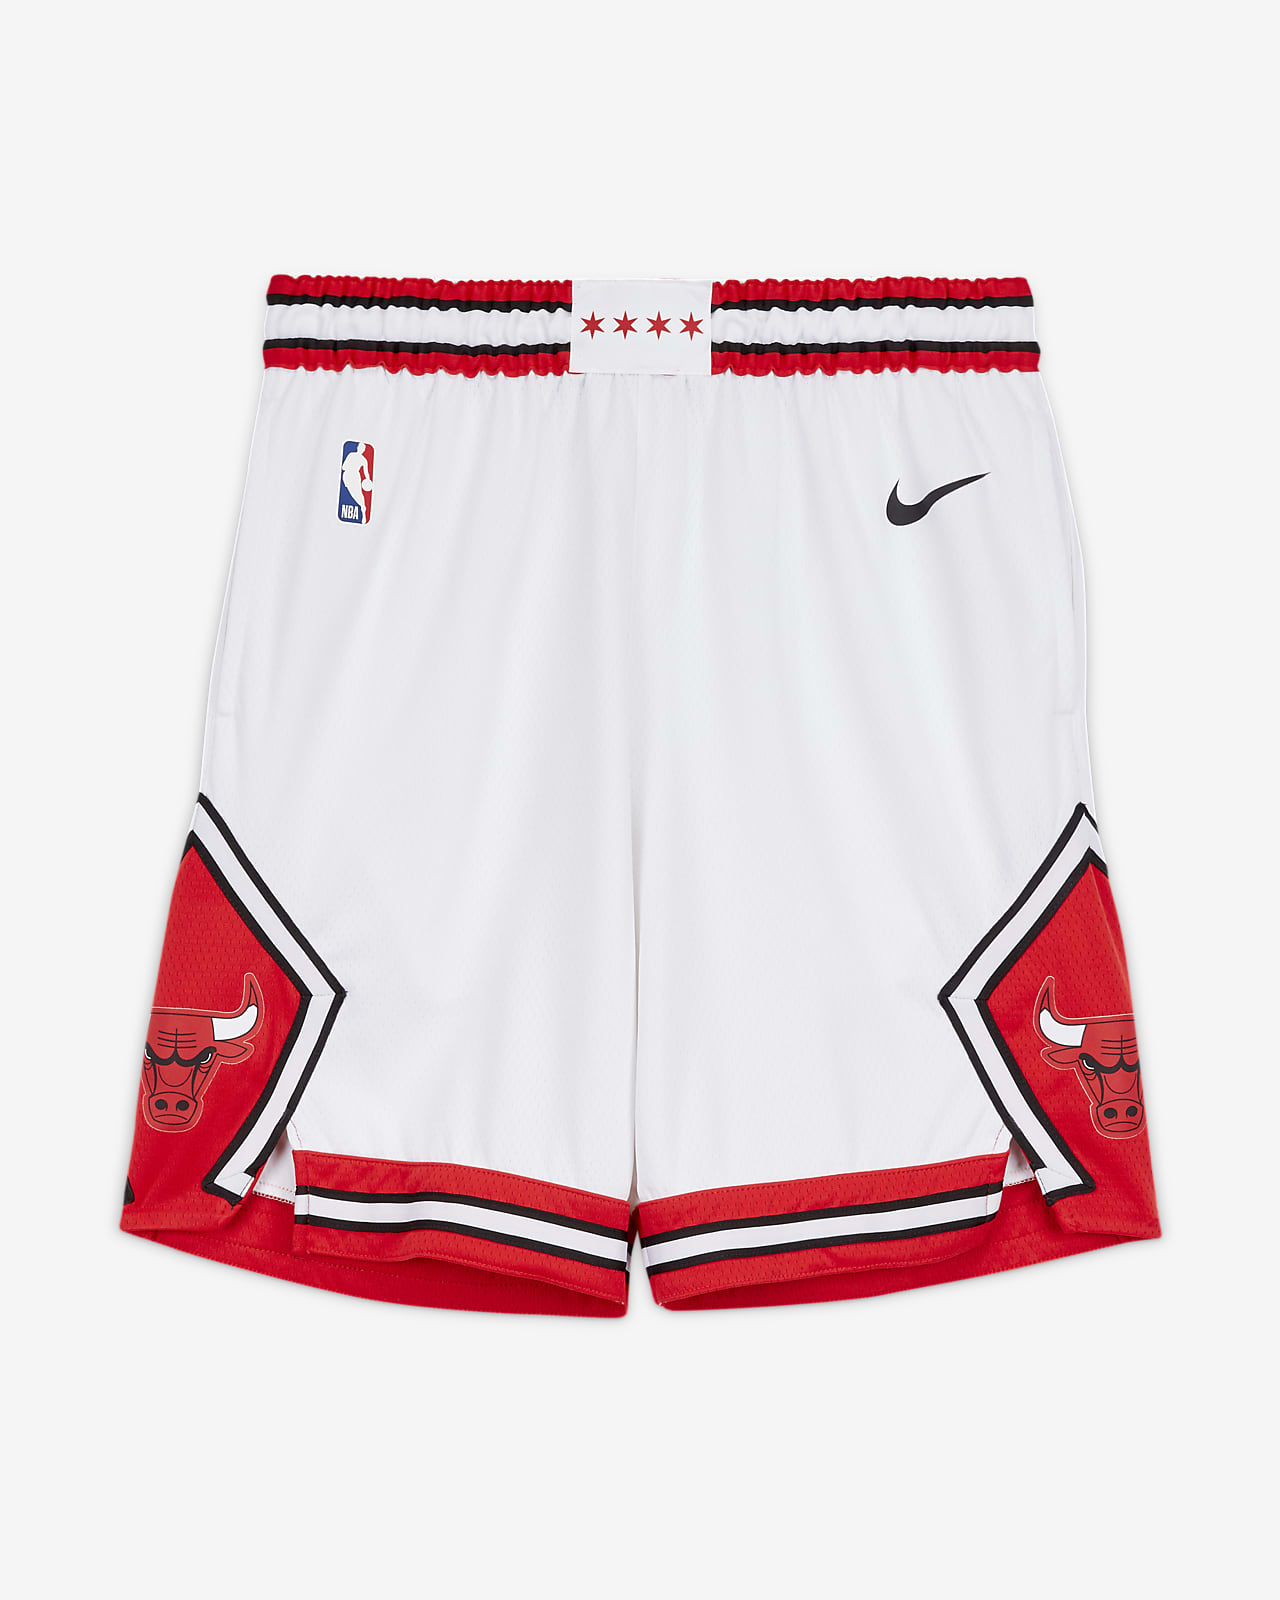 Chicago Bulls Association Edition Men's Nike NBA Swingman Shorts